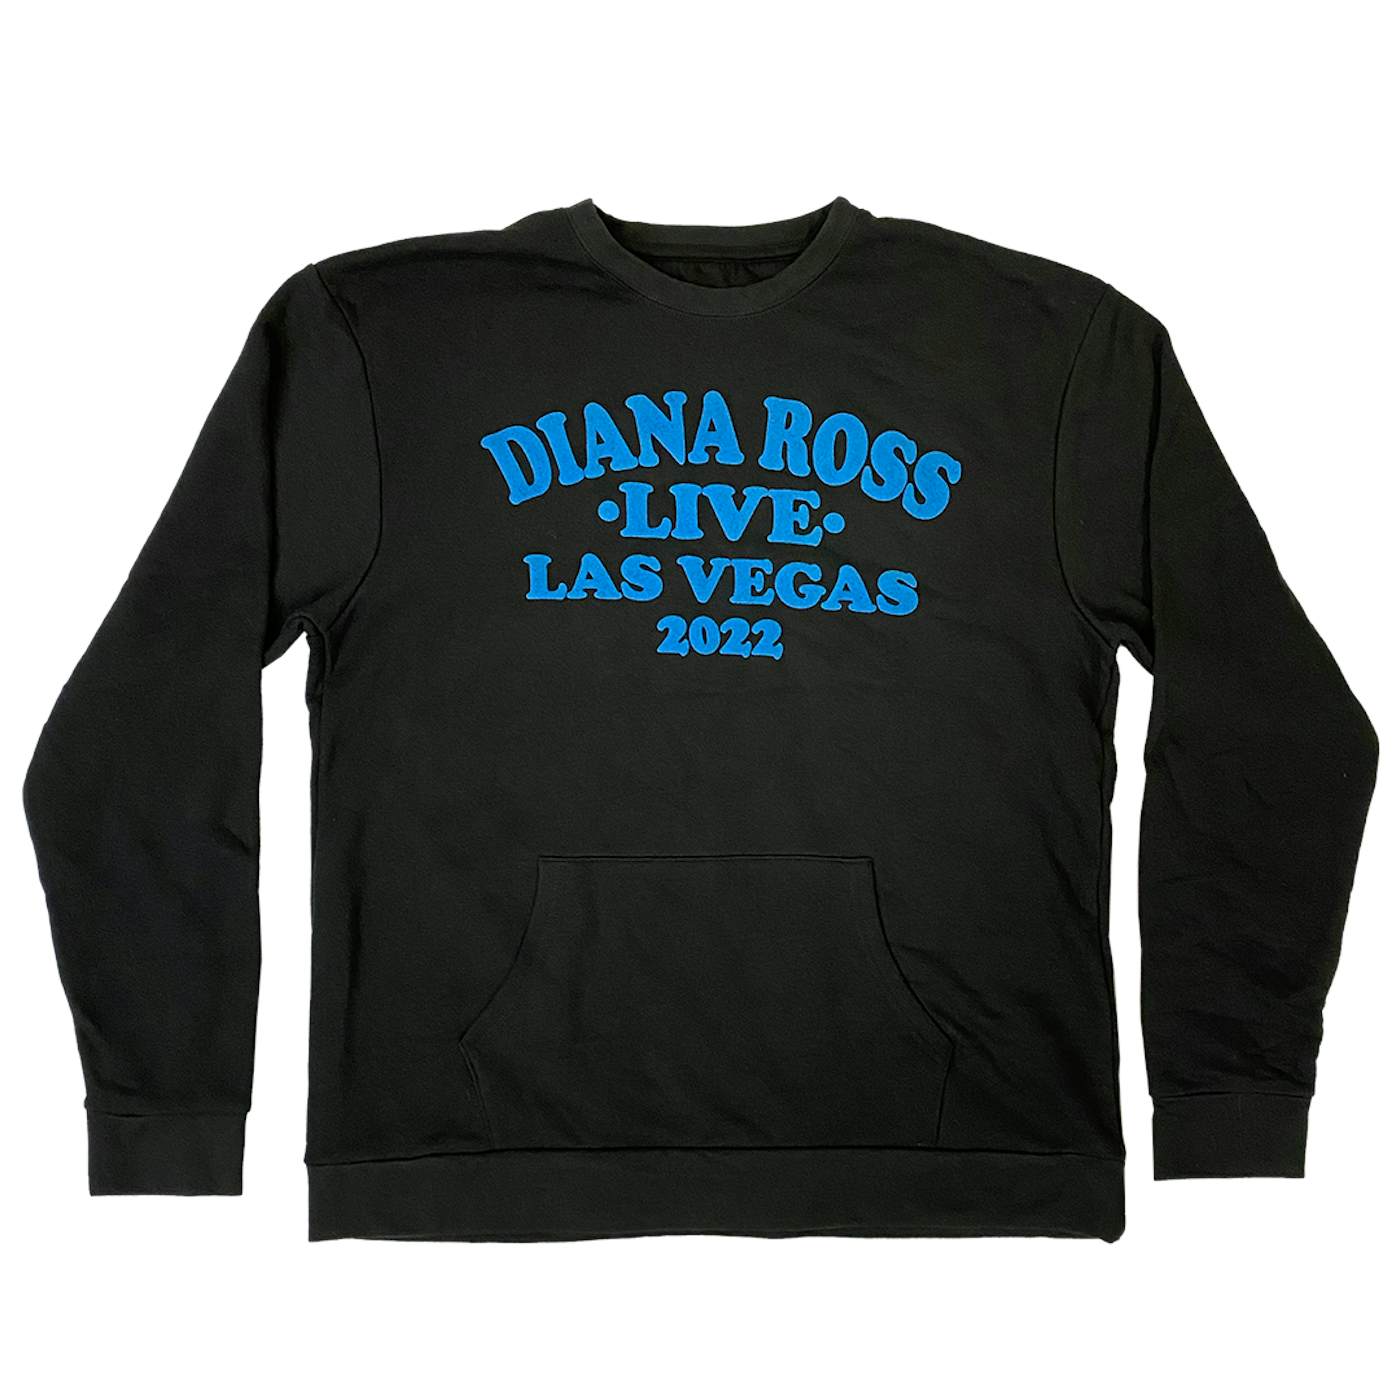 Diana Ross "Vintage Text" LAS VEGAS Event Pullover Sweatshirt